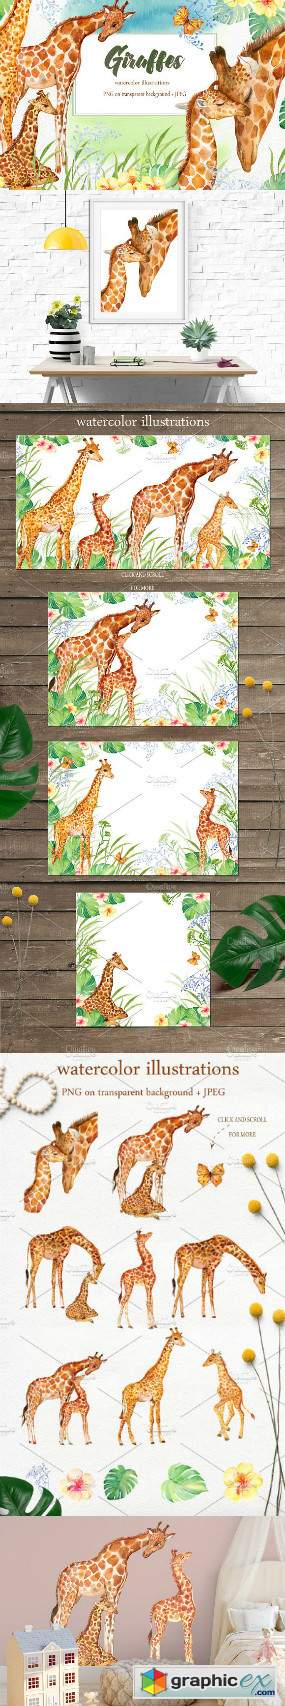 Giraffes watercolor illustrations